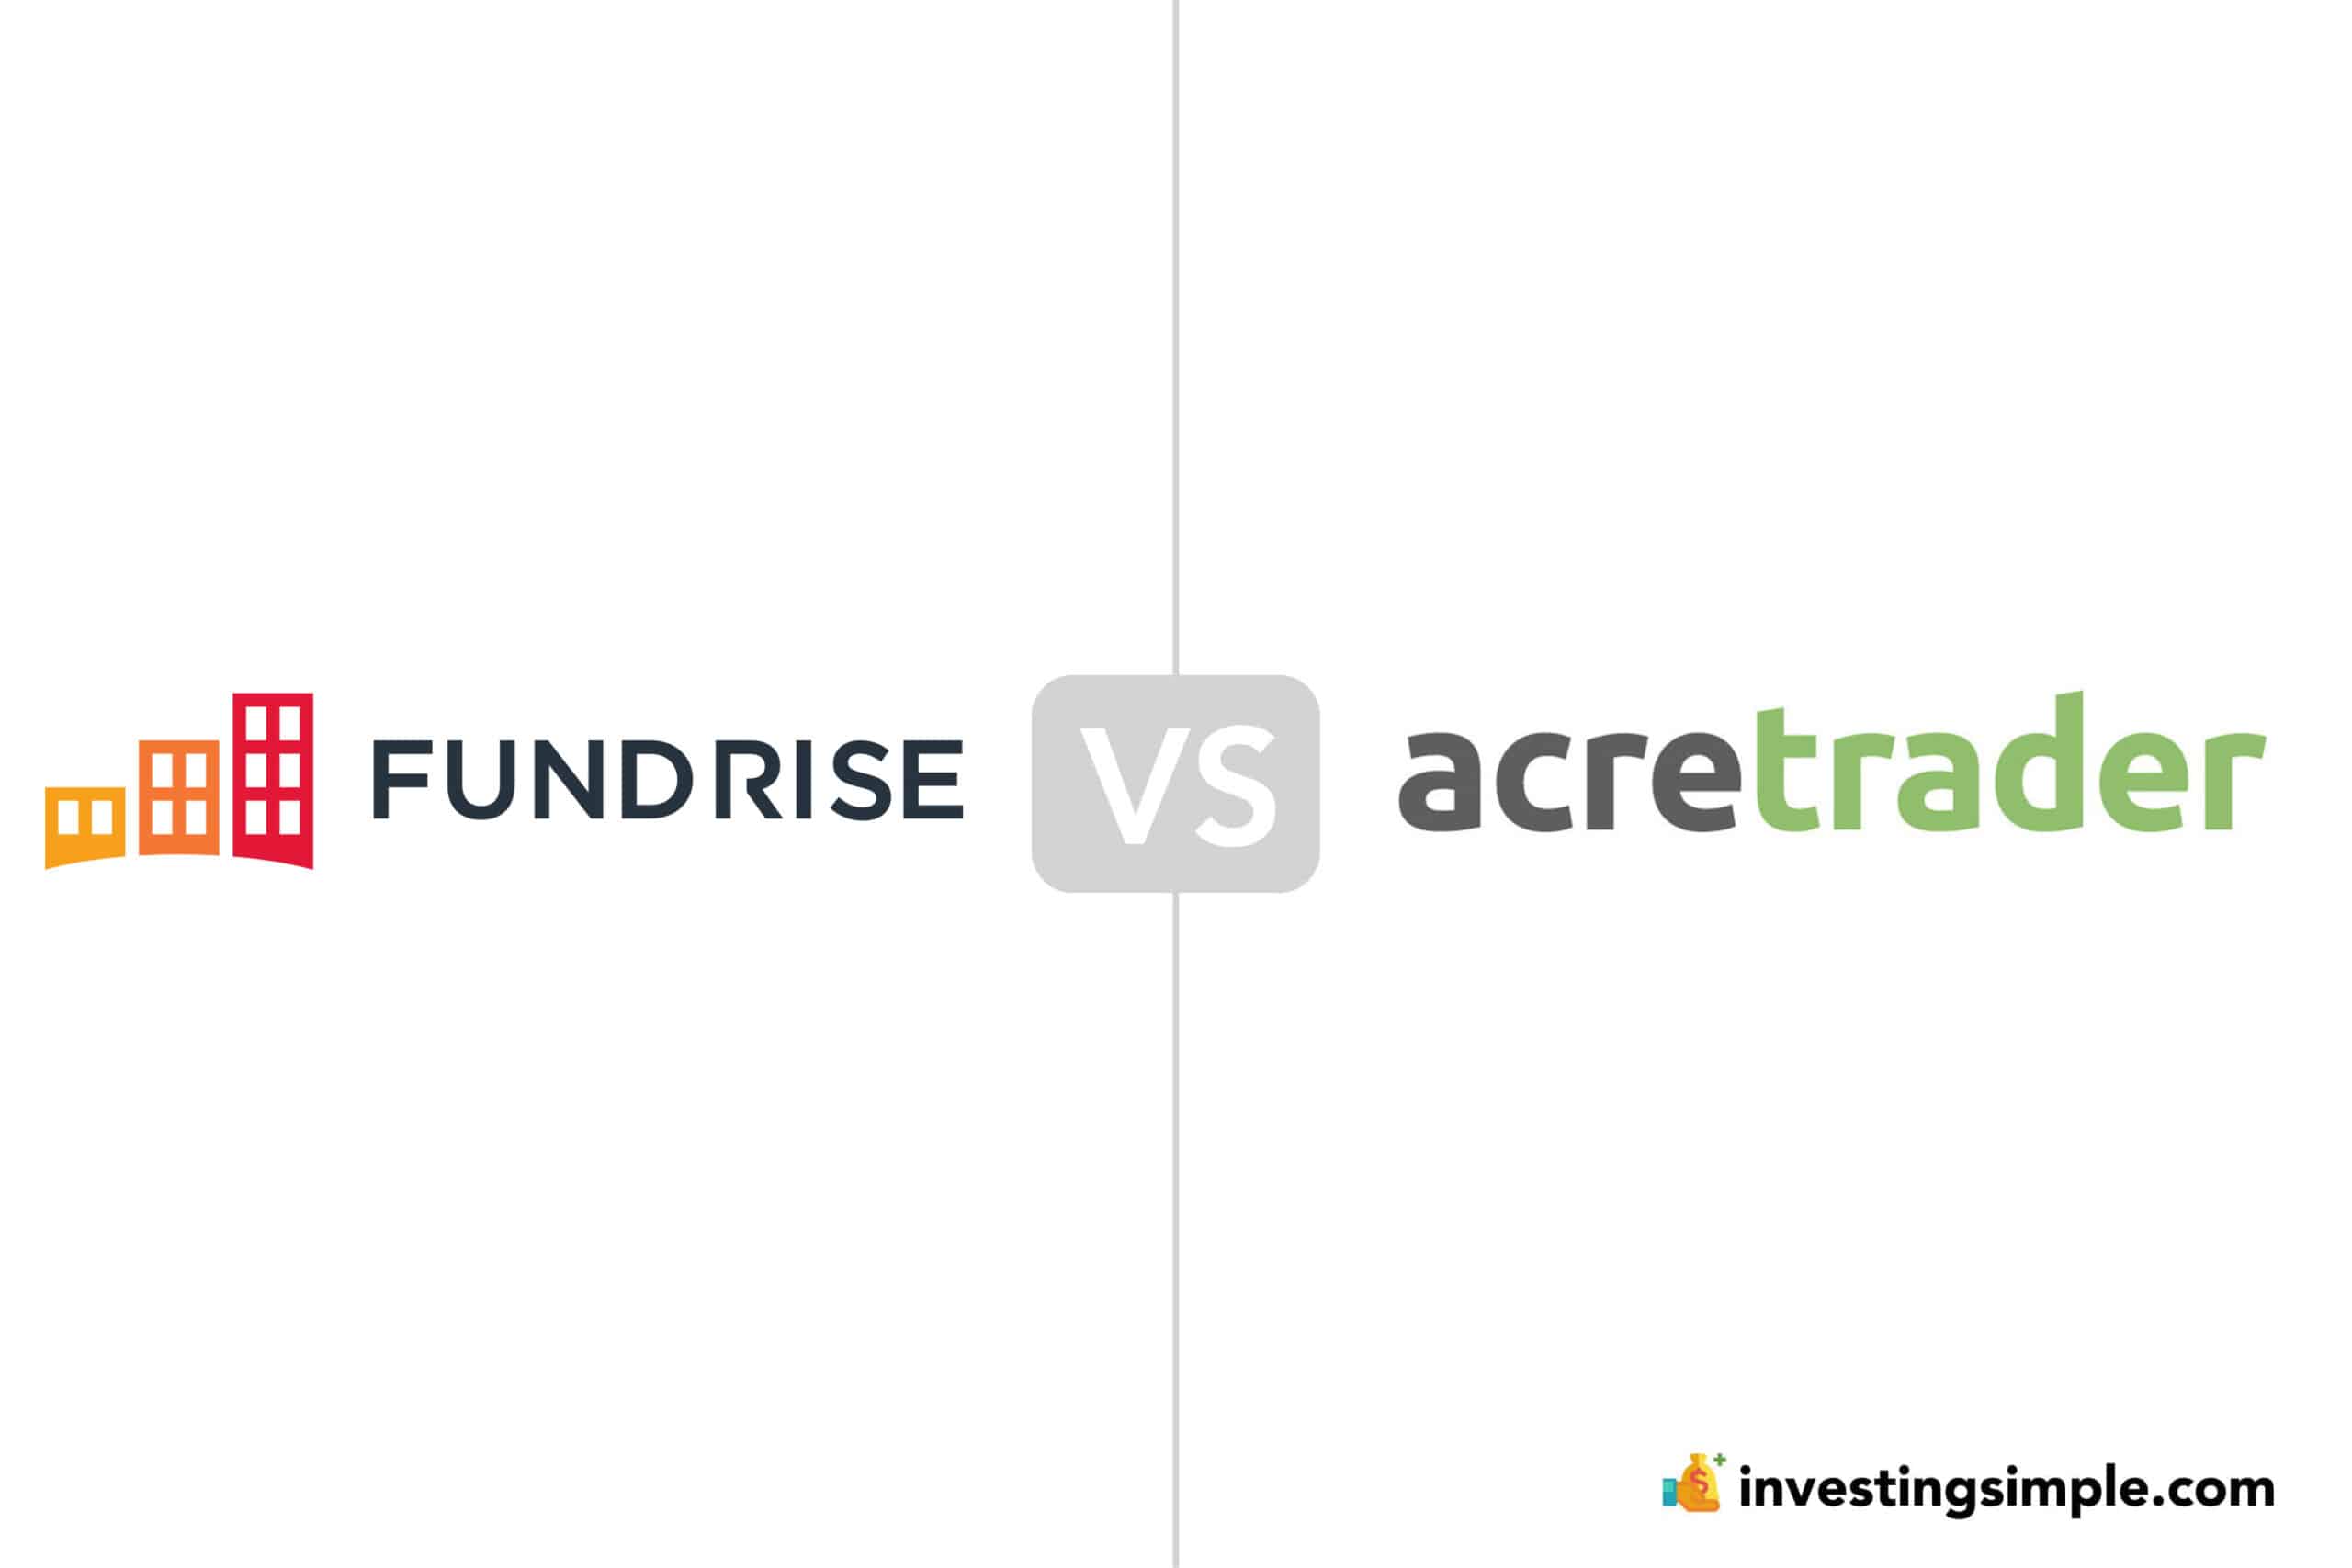 acretrader farmland investment vs fundrise real estate investment